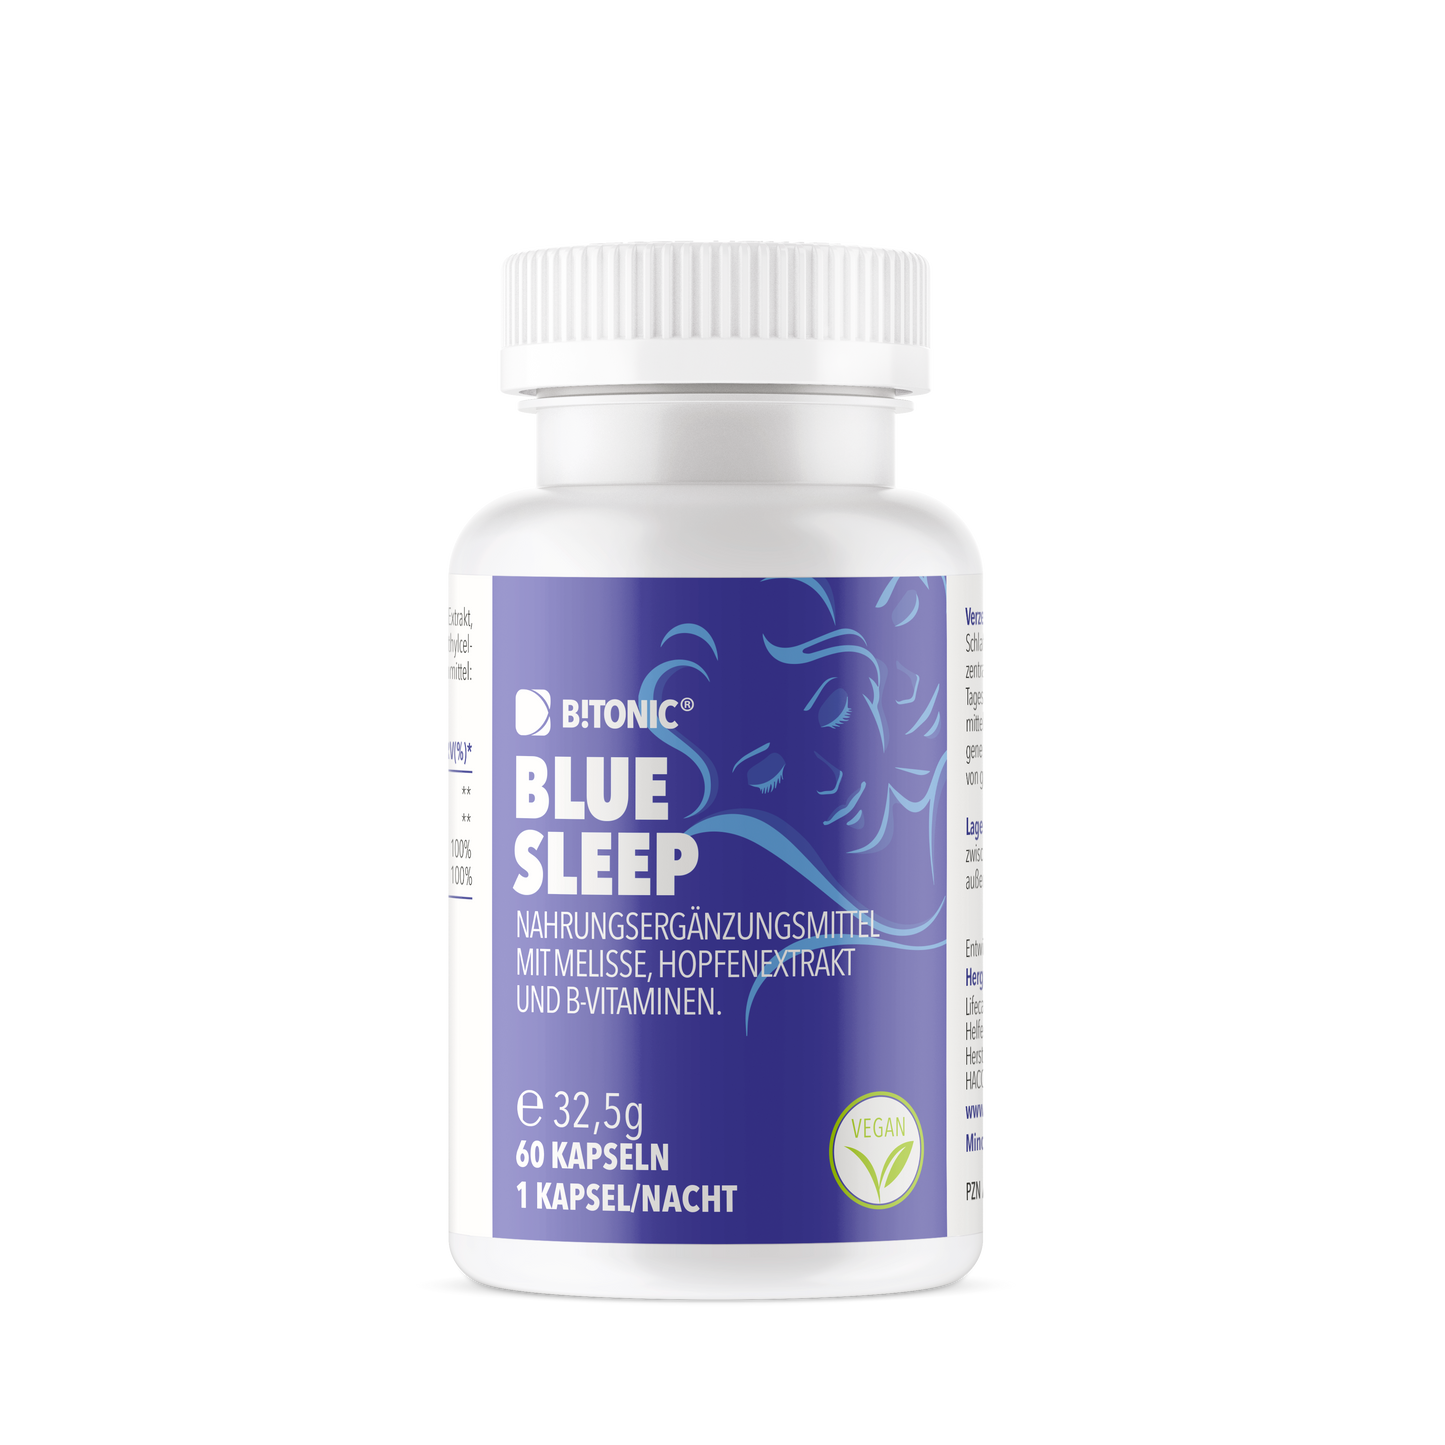 B!TONIC® Blue Sleep - The natural sleep optimizer